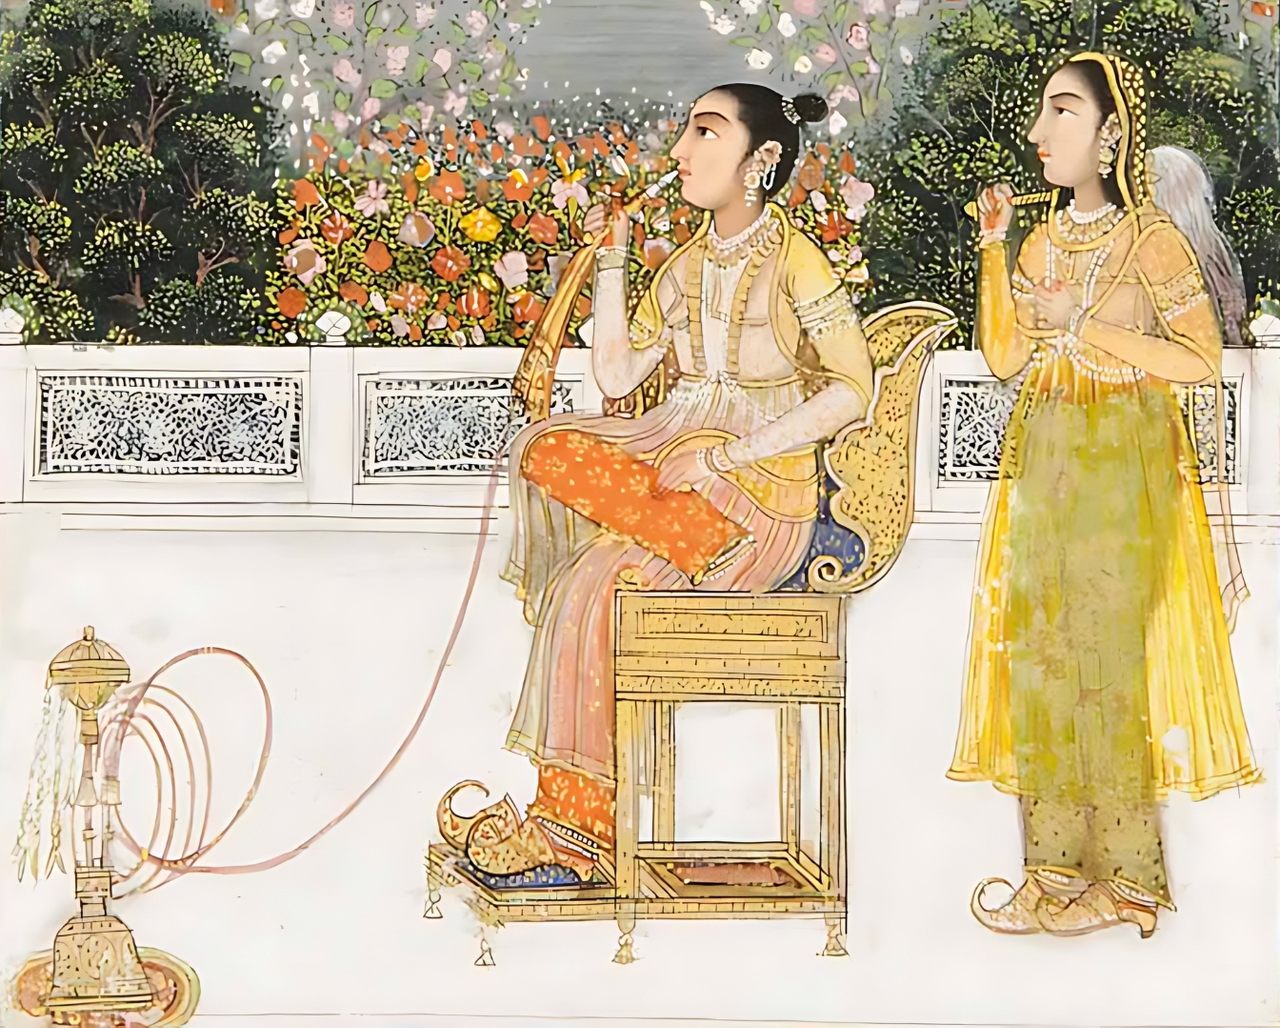 Painted around 1800, this Mughal miniature shows Princess Gulbadan Begum smoking a hooka.